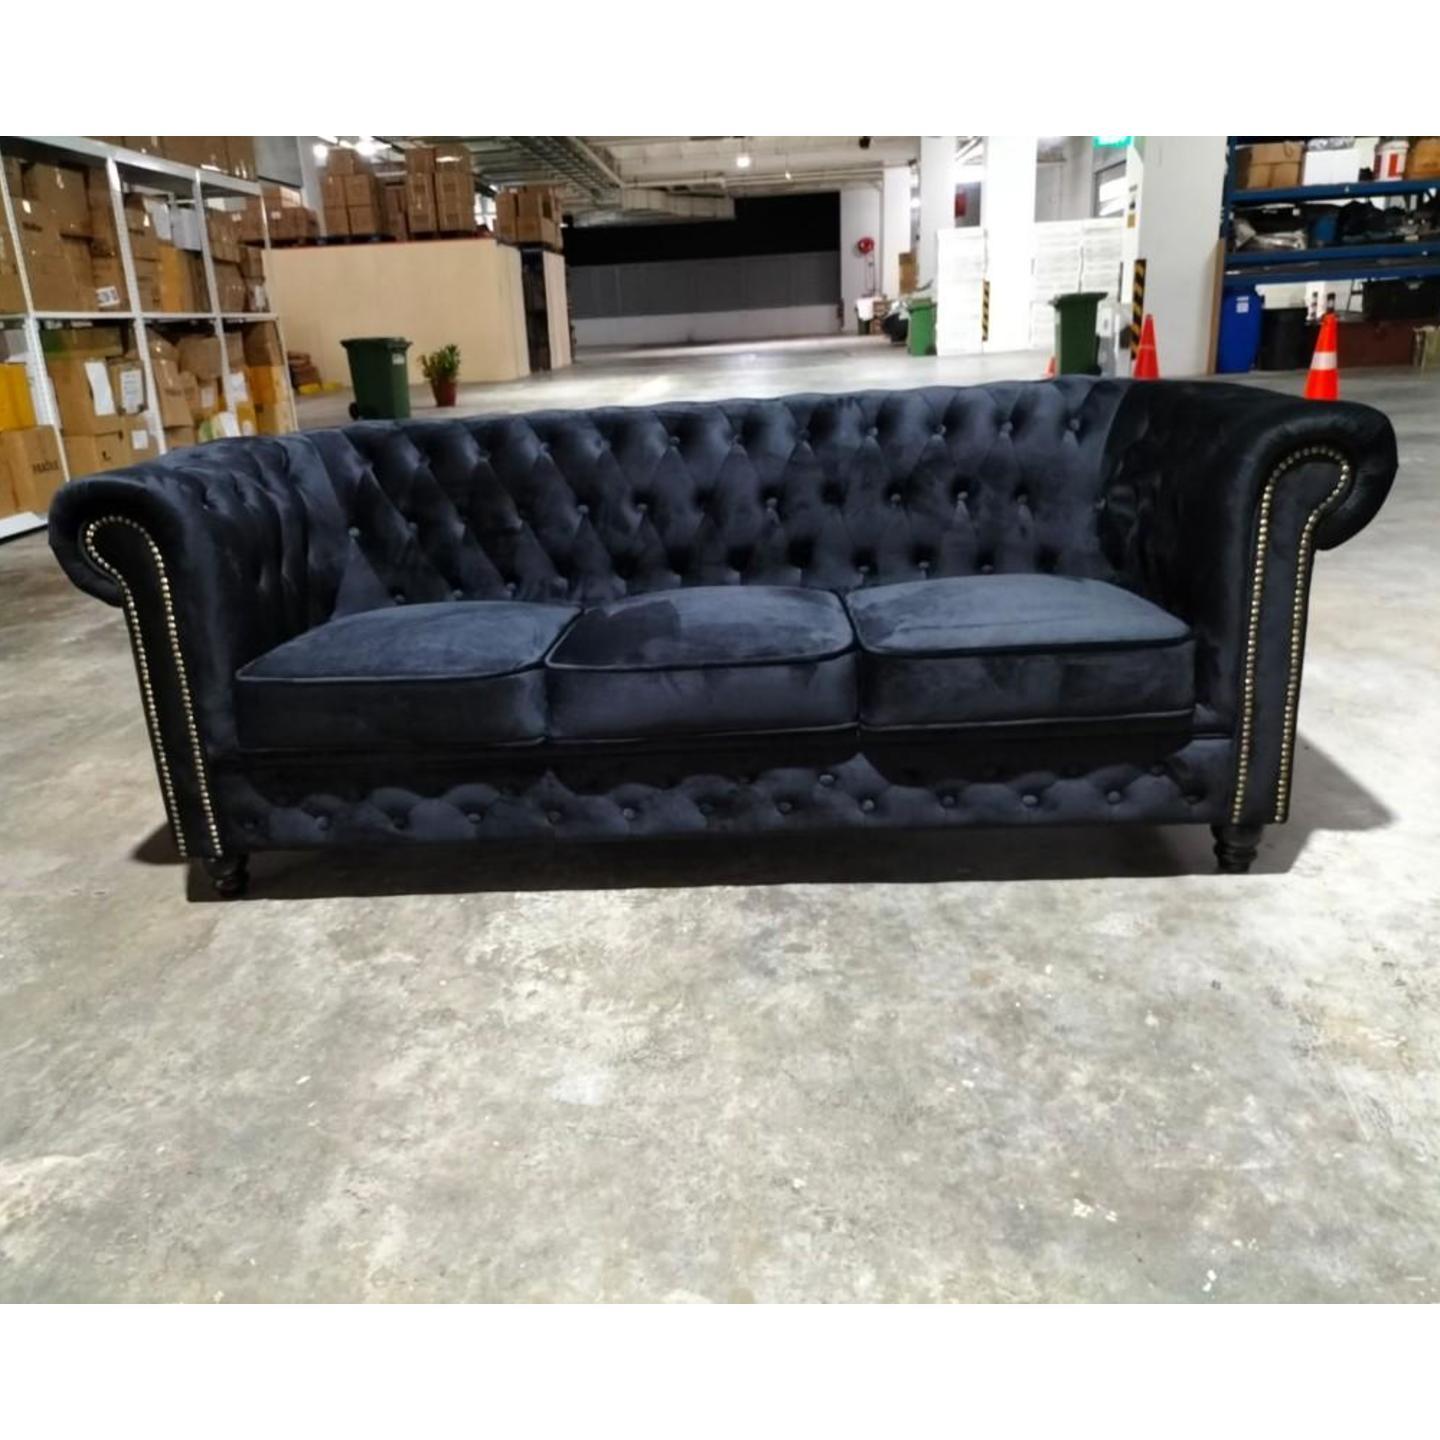 SALVADORE X 3 Seater Chesterfield Sofa in VELVET BLACK